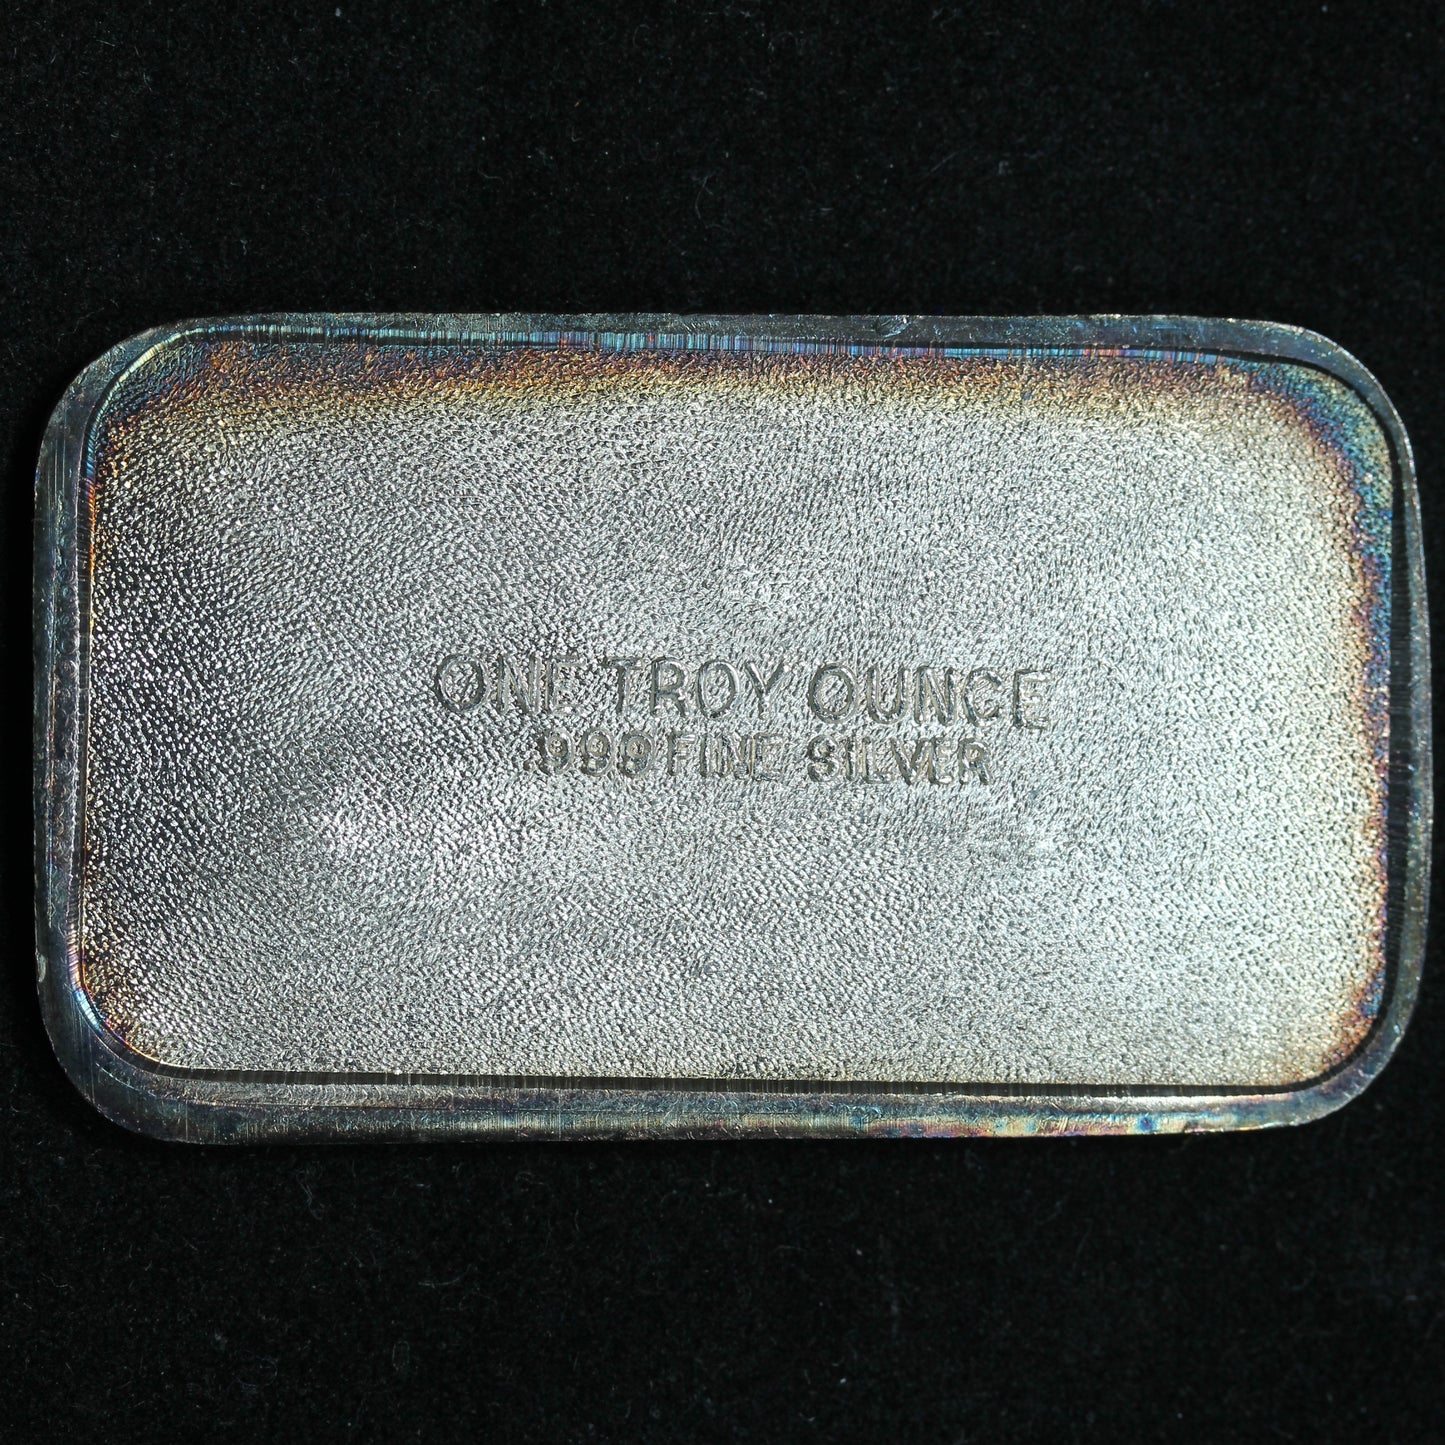 1 oz .999 Fine Silver Art Bar - 1776 1976 Bicentennial United States of America